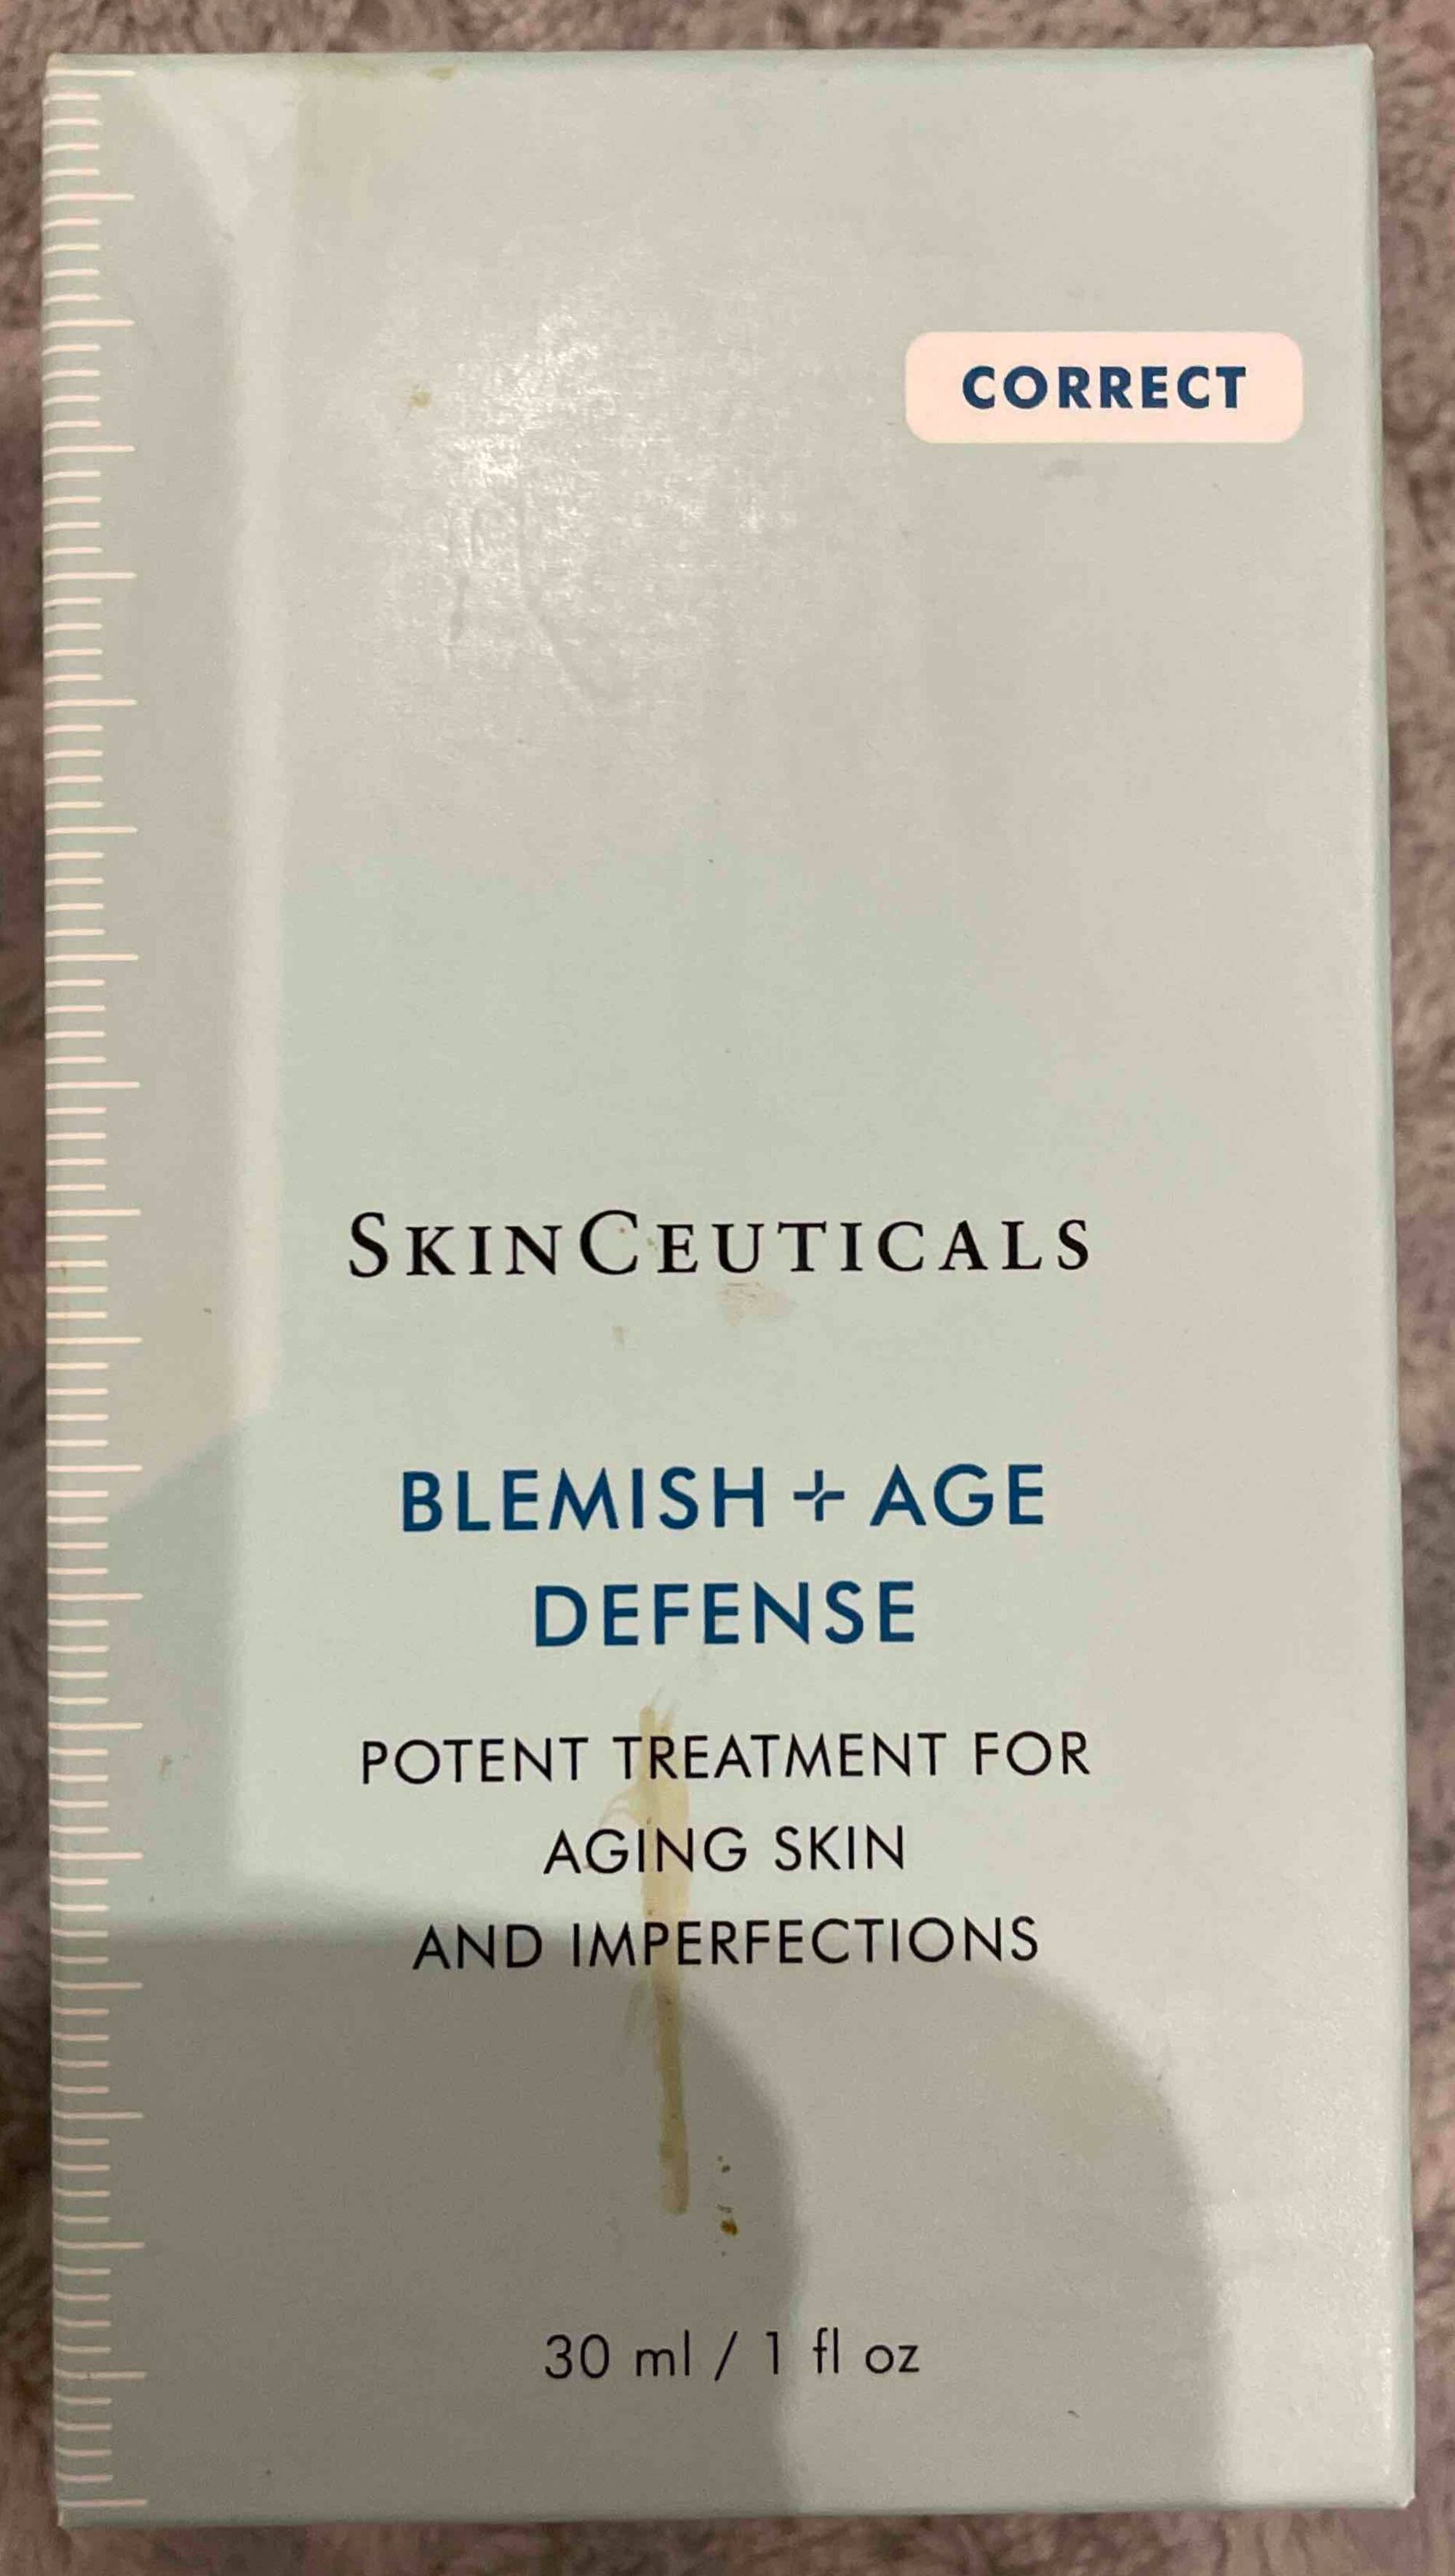 SKINCEUTICALS - Correct Blemish+age defense 